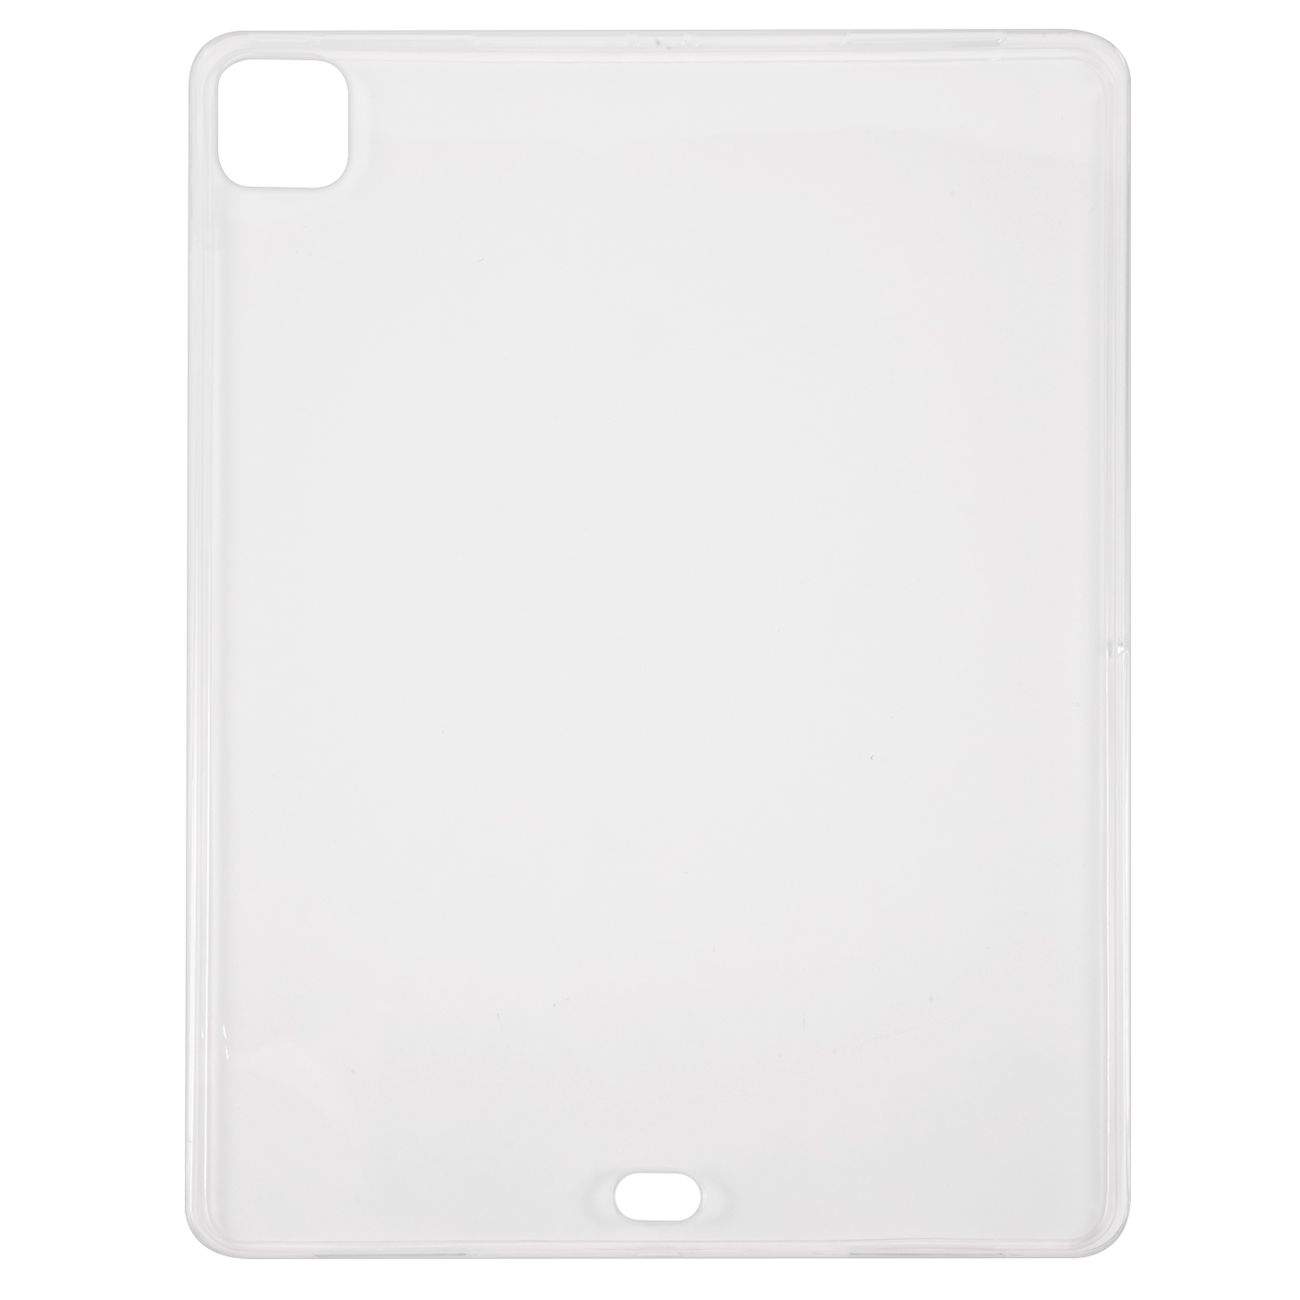 Чехол Red Line для iPad Pro 12.9 2020 матовый (УТ000026641)